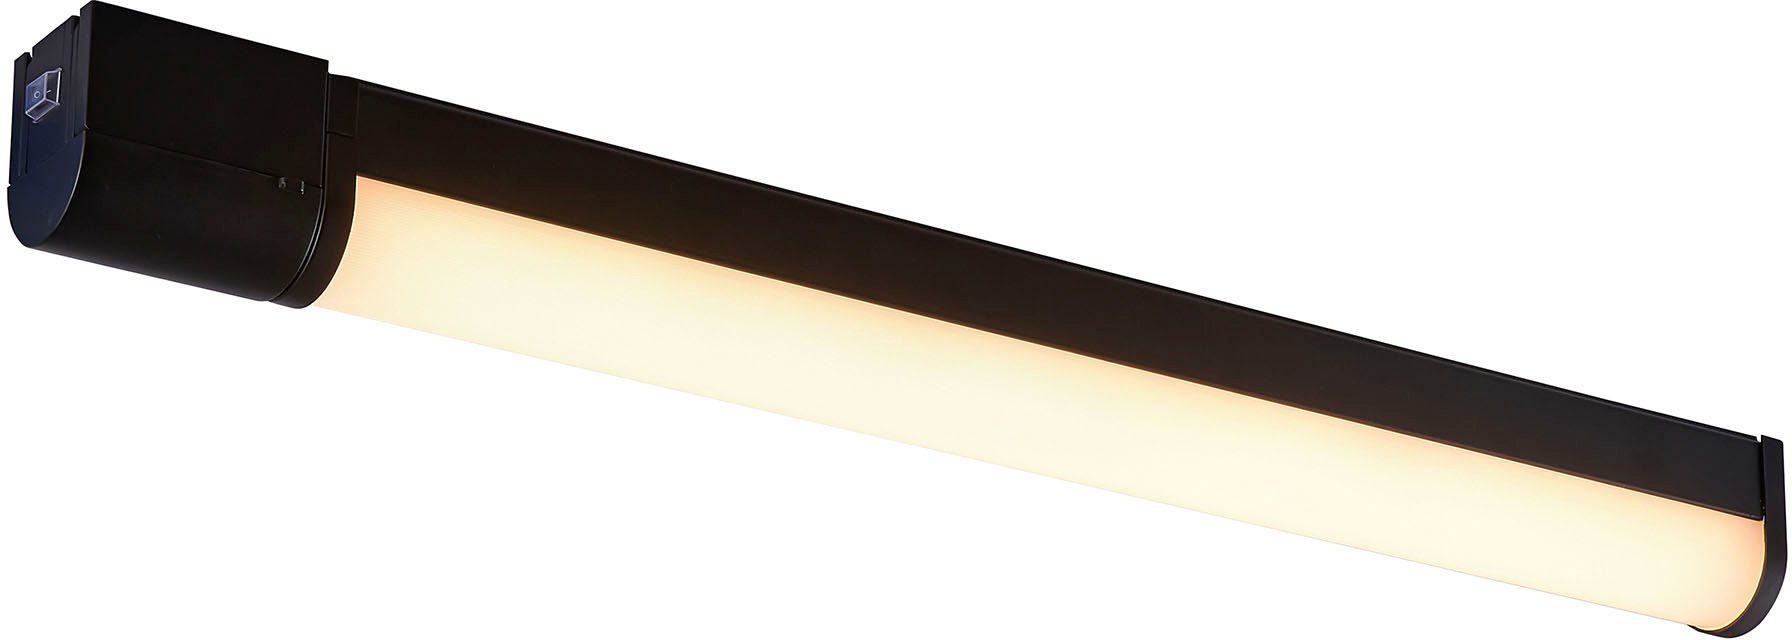 Nordlux LED Unterbauleuchte 5 20.000h integriert, LED + Garantie fest 68, Malaika Lebensdauer LED Warmweiß, Jahre